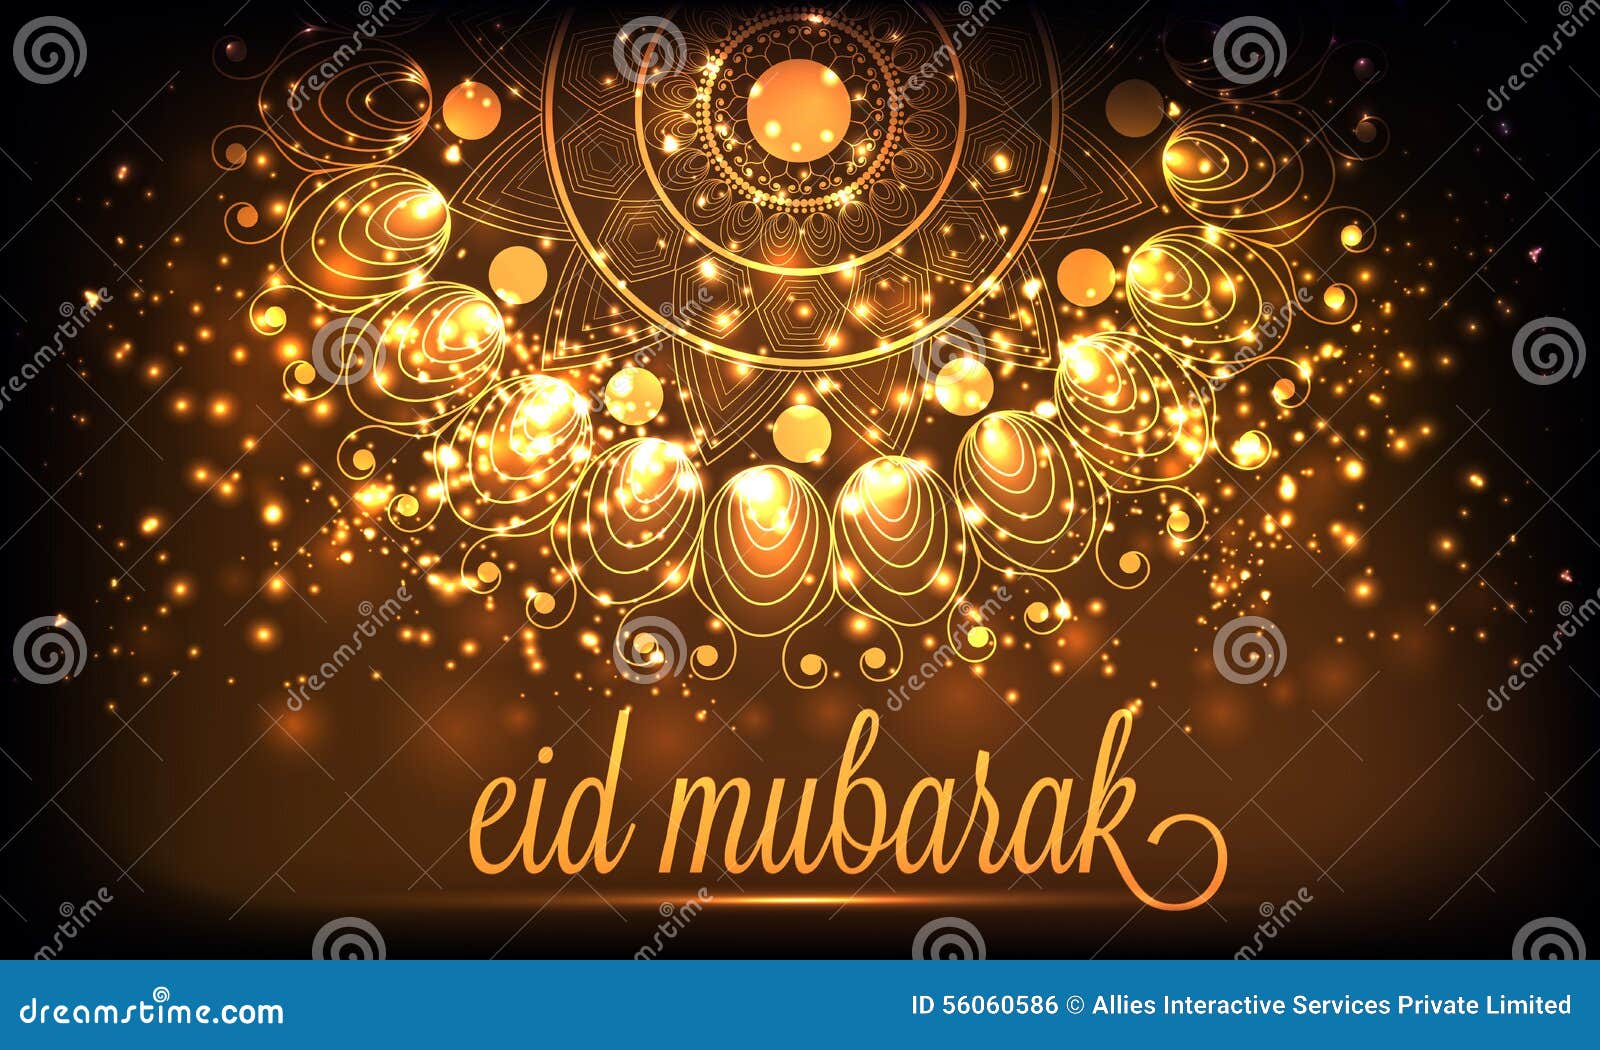 Beautiful Poster, Banner or Flyer for Eid Mubarak. Stock ...